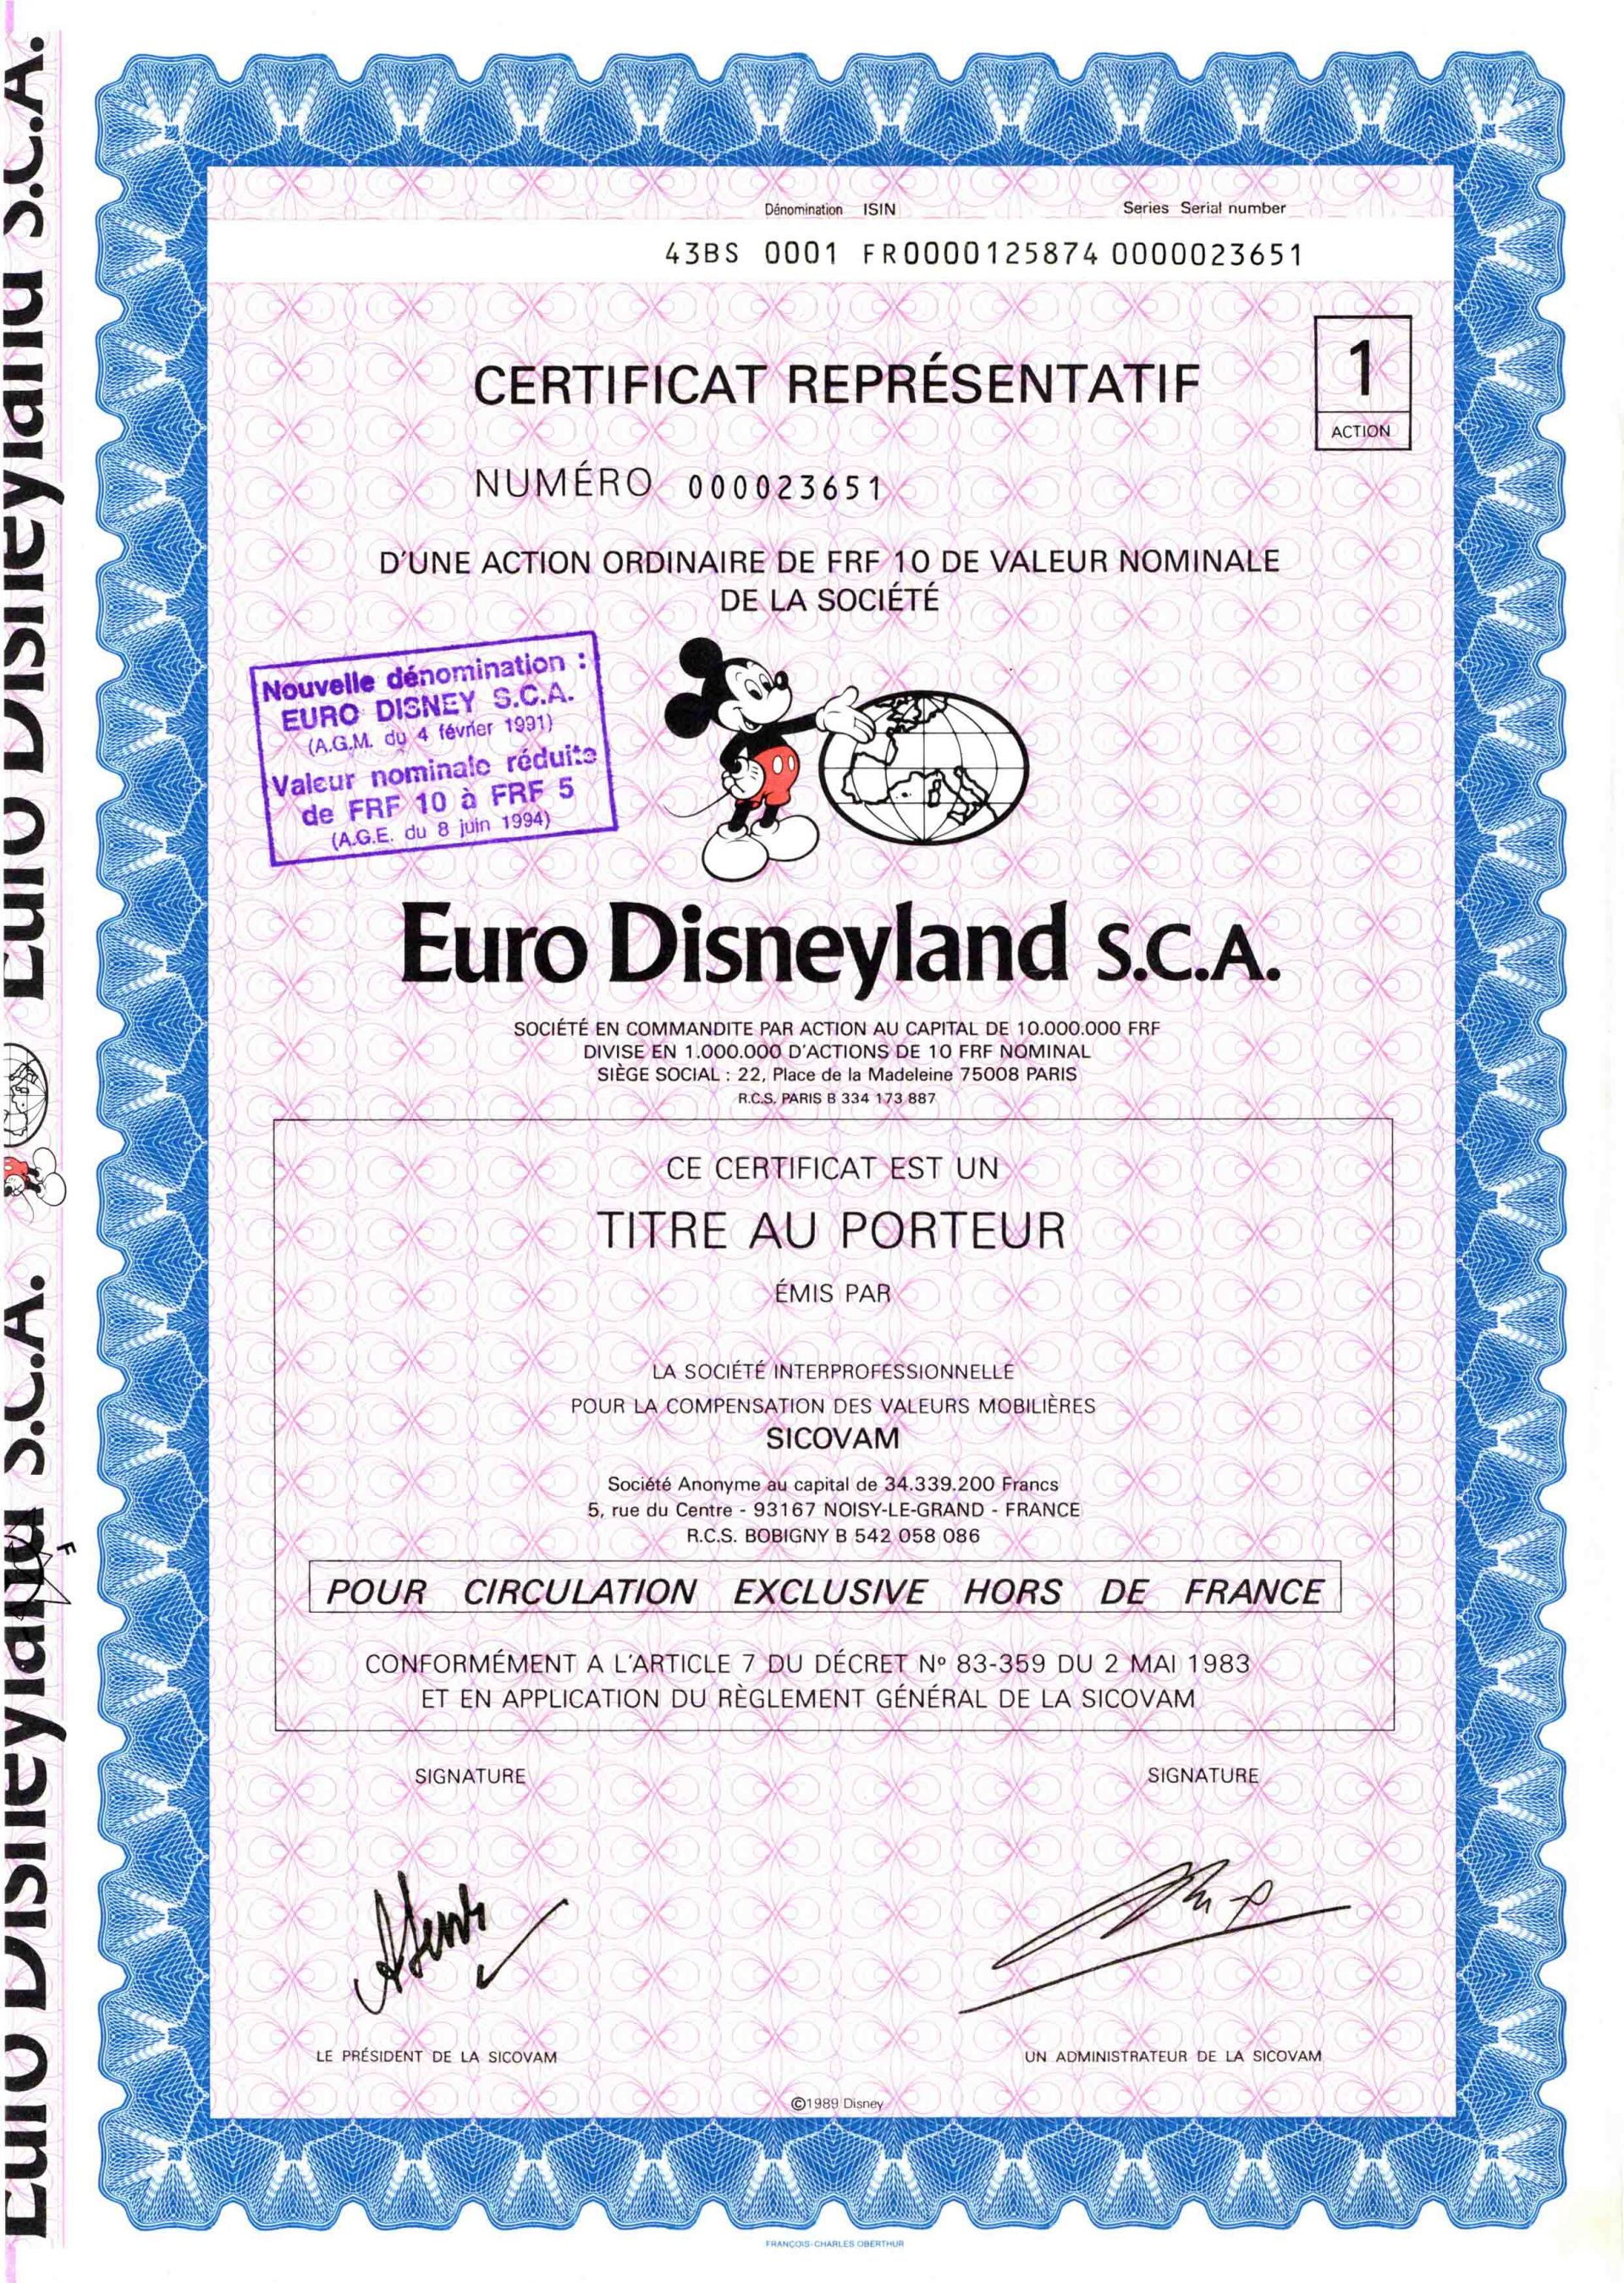 Euro Disneyland S.C.A. - Disney Stock Certificate - Disneyland Park Paris